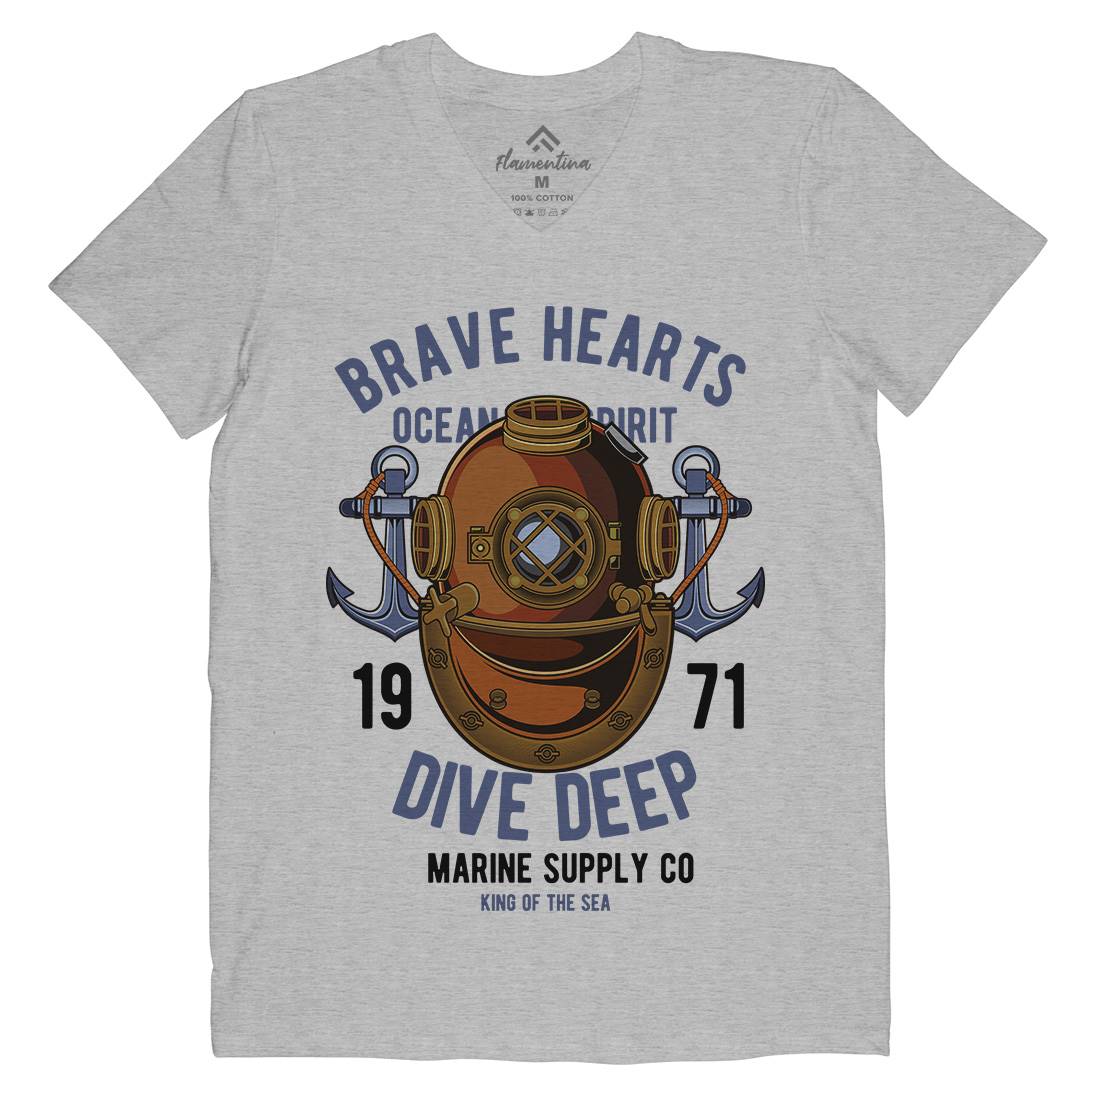 Brave Hearts Diver Mens Organic V-Neck T-Shirt Navy C324